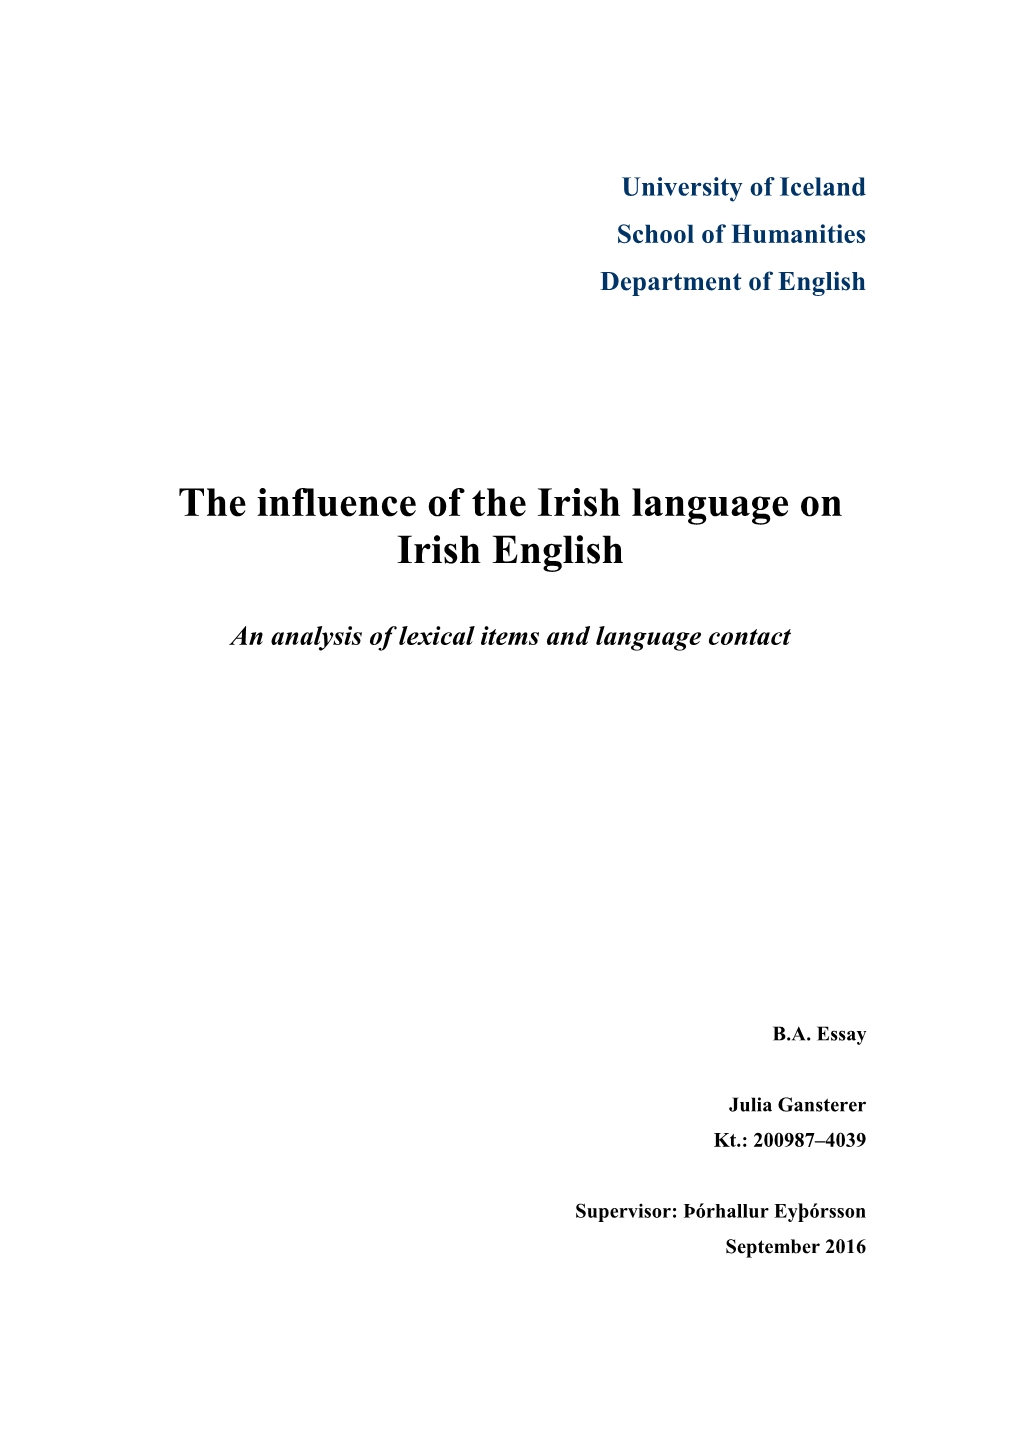 The Influence of the Irish Language on Irish English